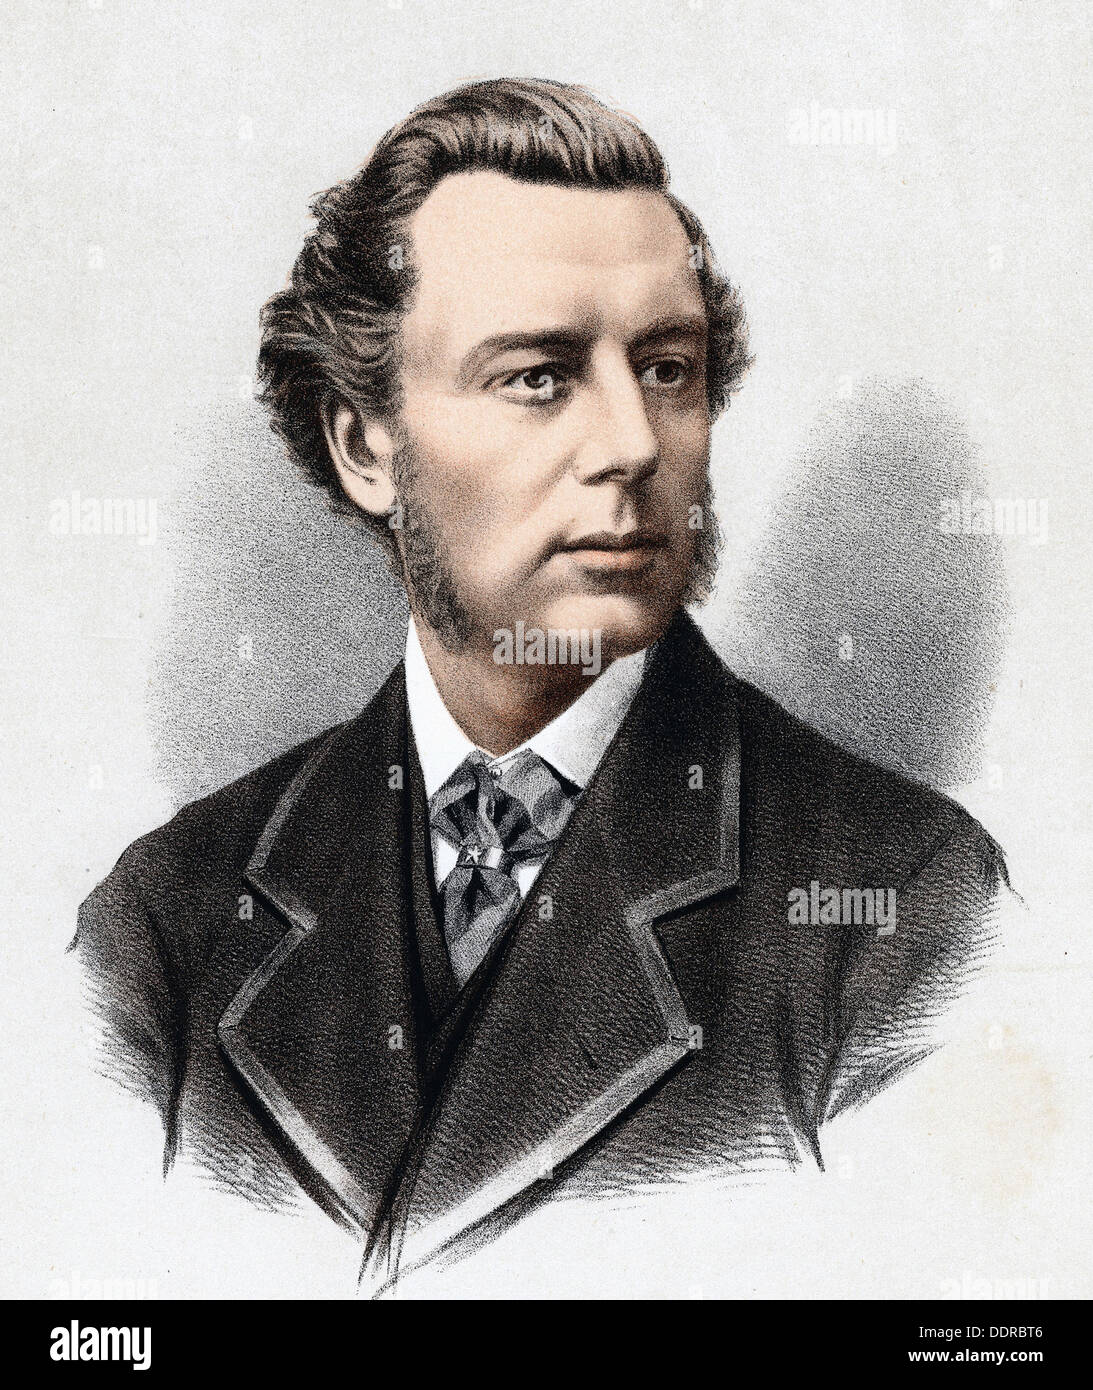 Joseph Chamberlain - statista inglese - litografia - 1880 Foto Stock